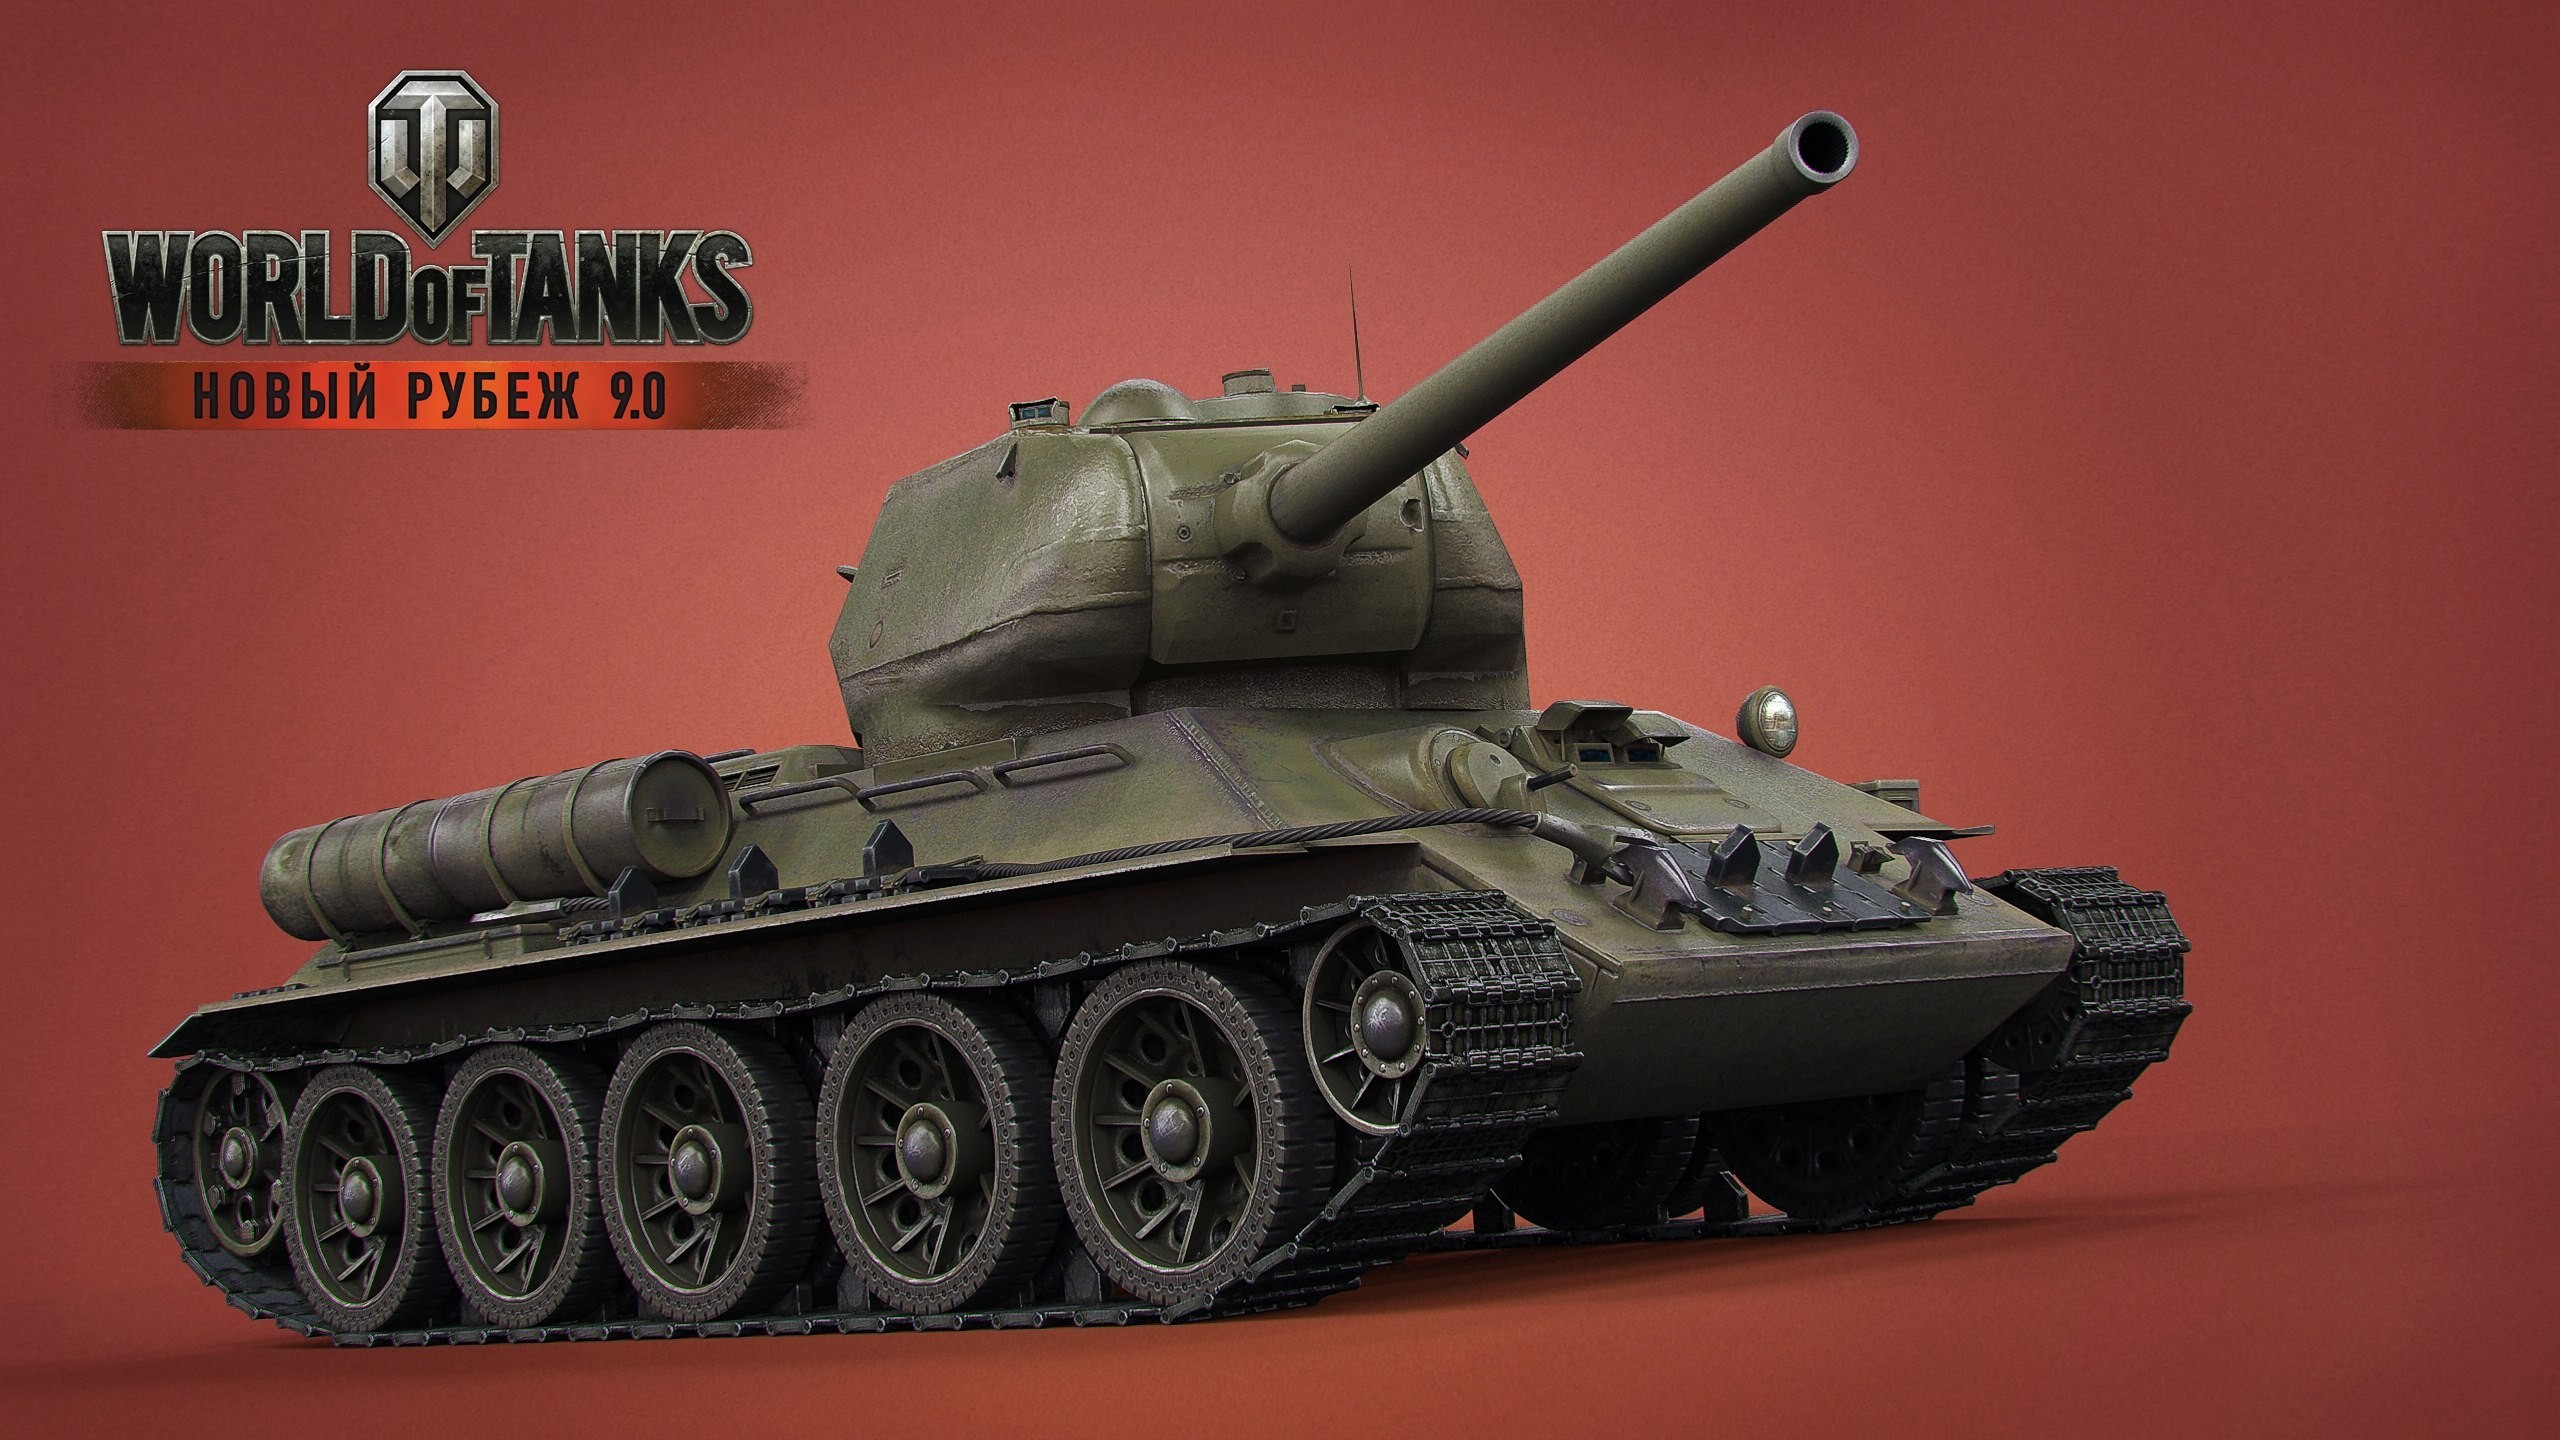 General 2560x1440 World of Tanks tank wargaming video games T-34 Russian/Soviet tanks